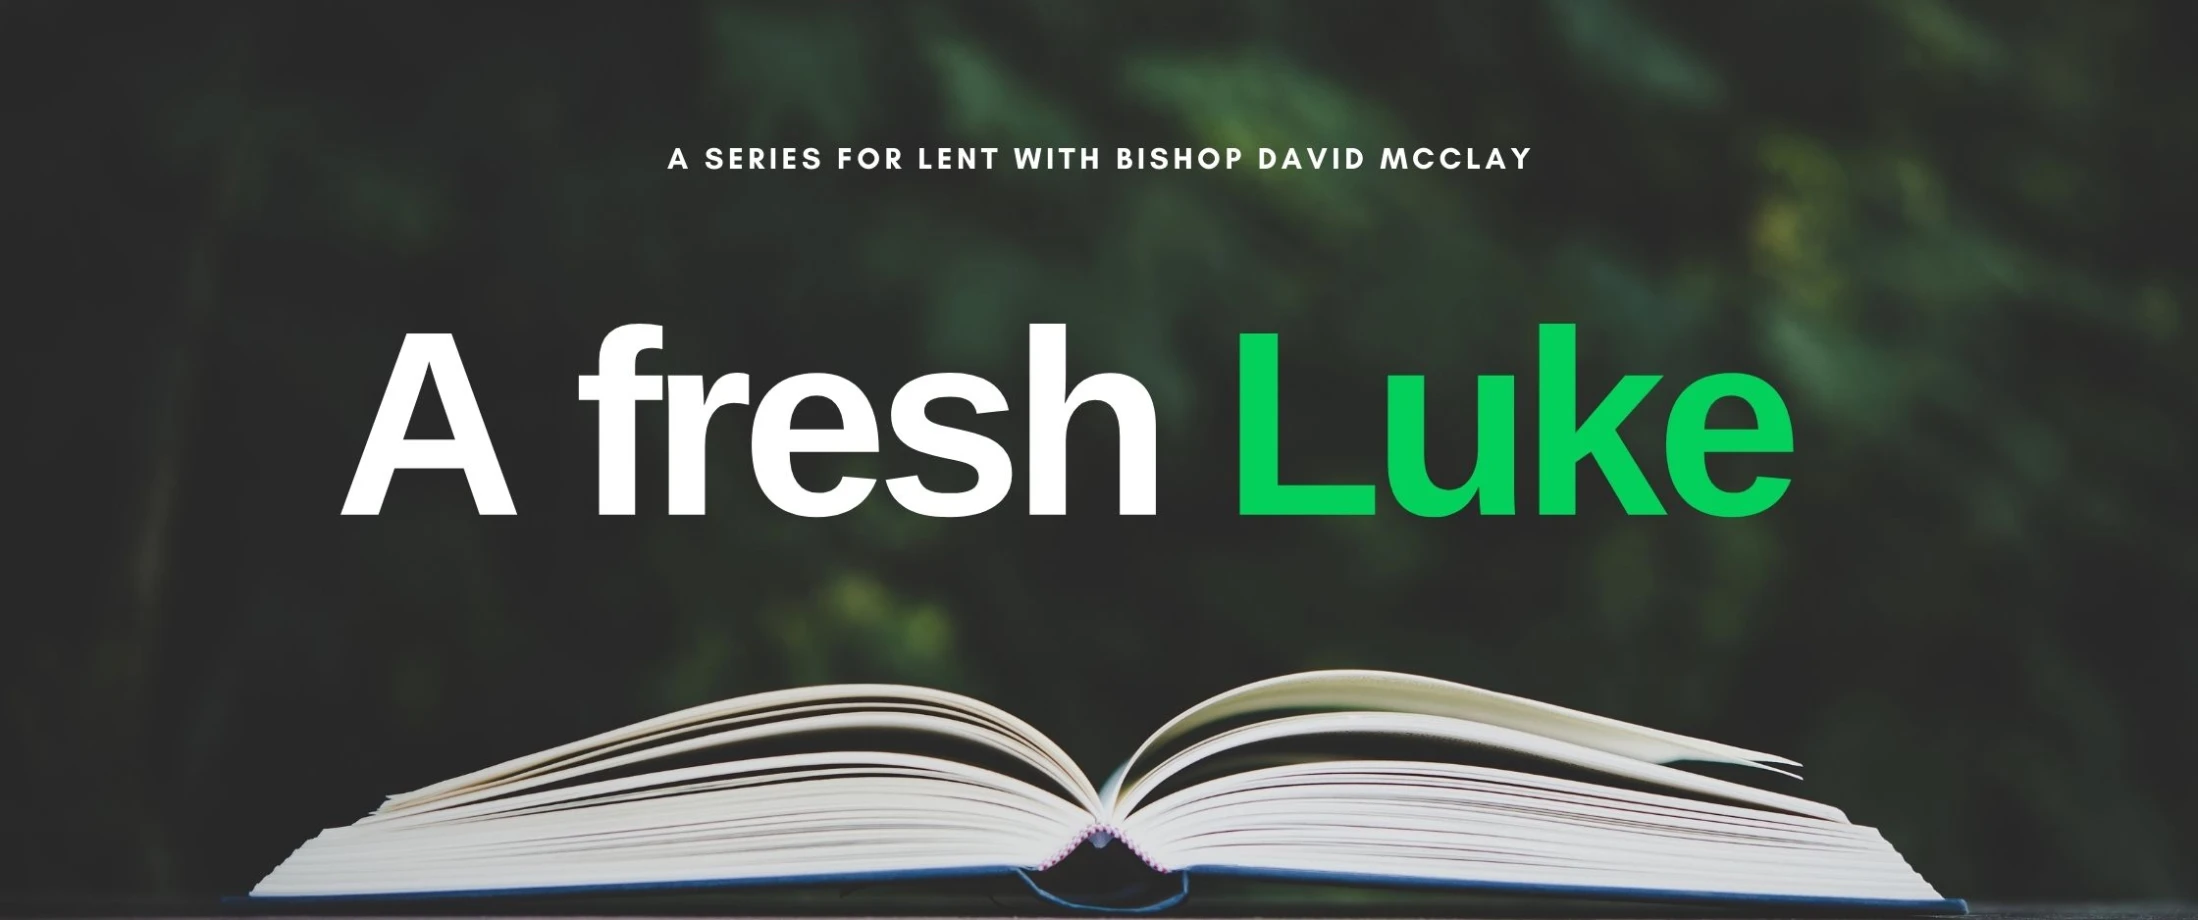 Bishop David takes ‘A fresh Luke’